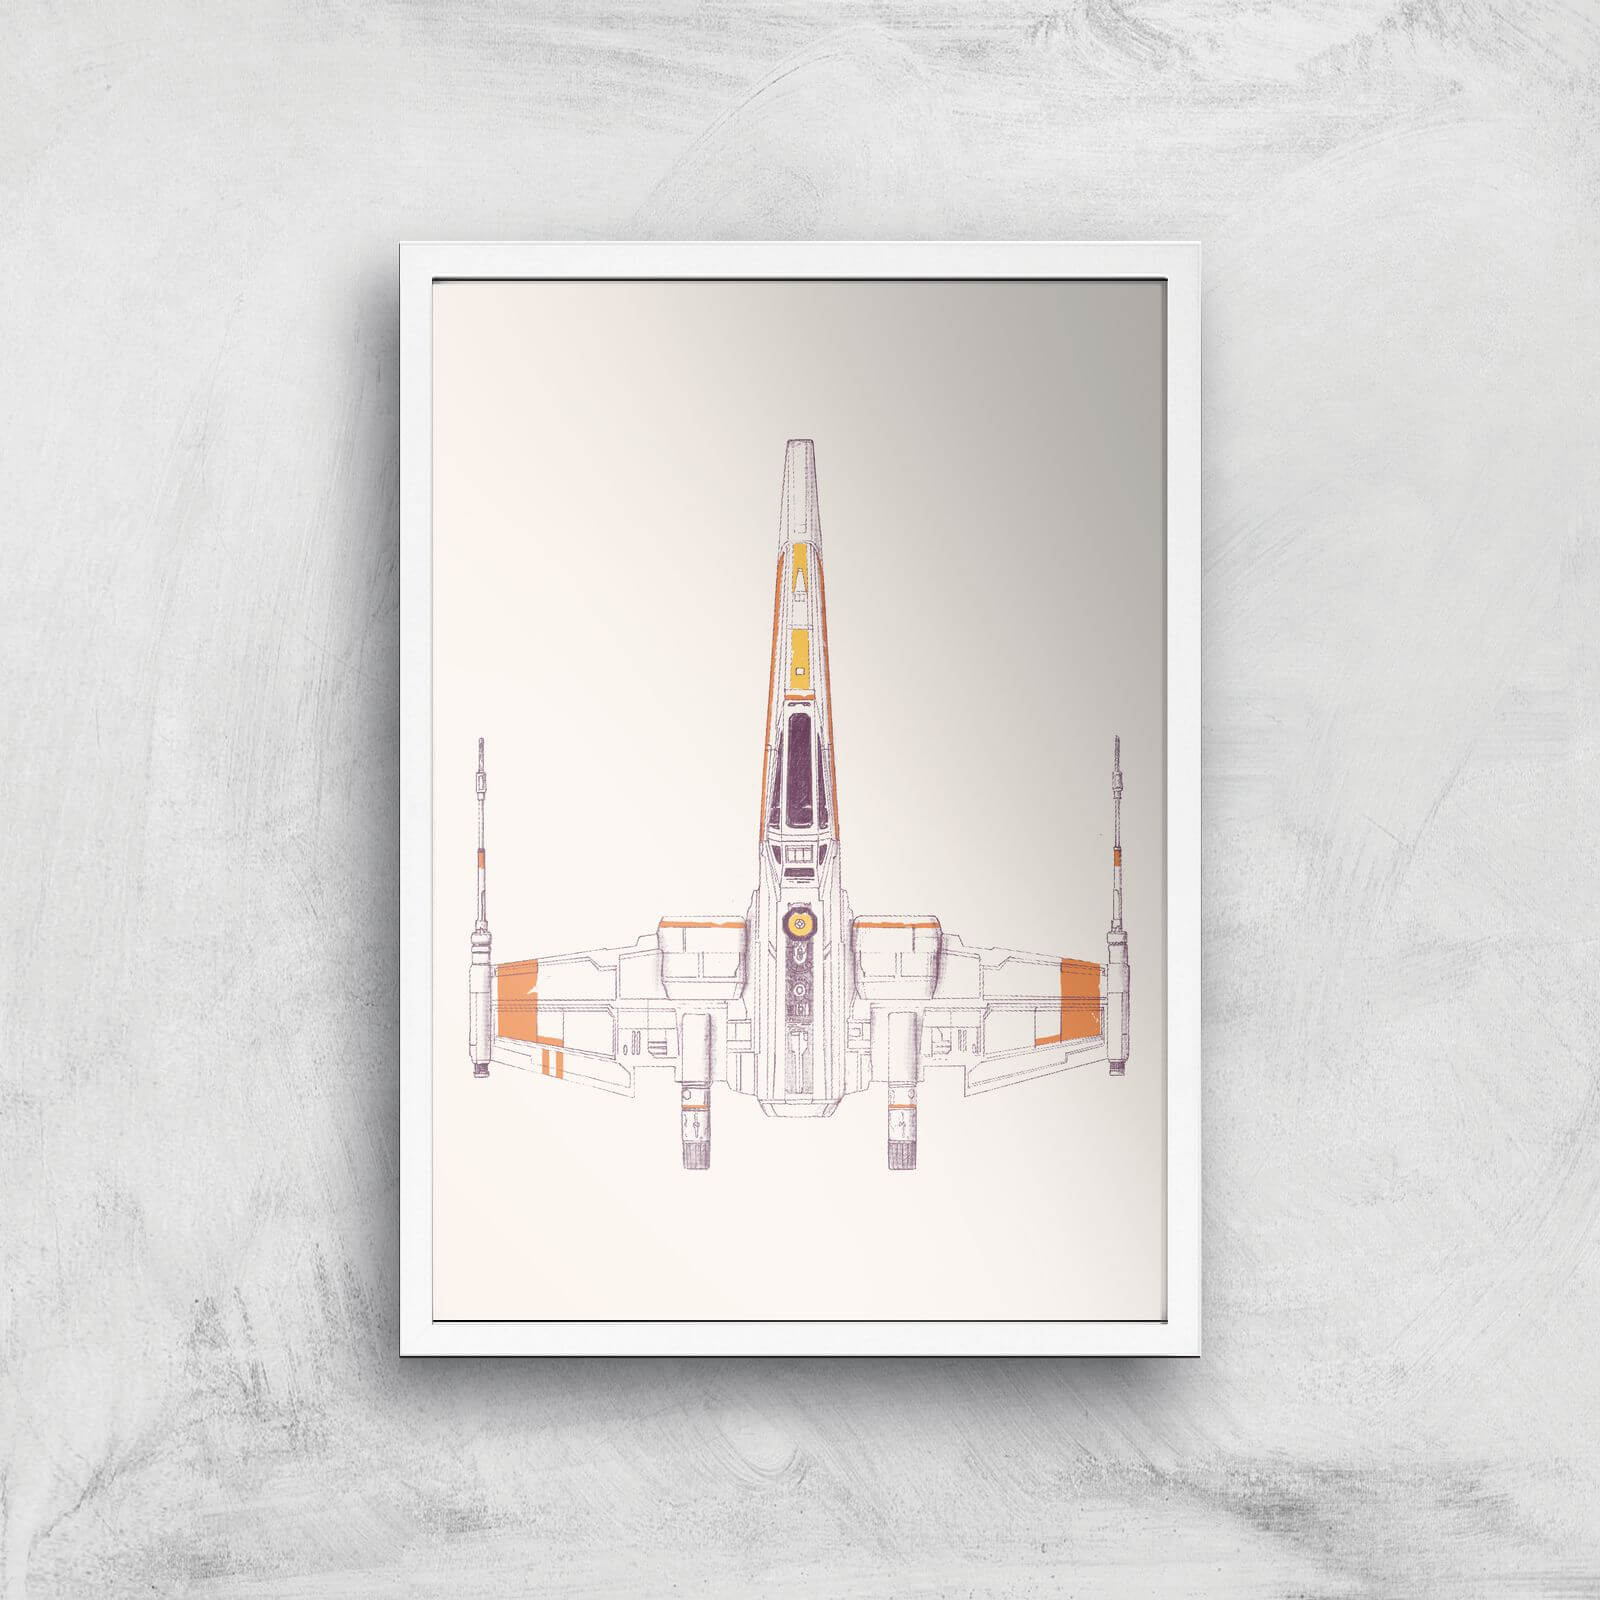 Space Ship Giclee Art Print - A3 - White Frame